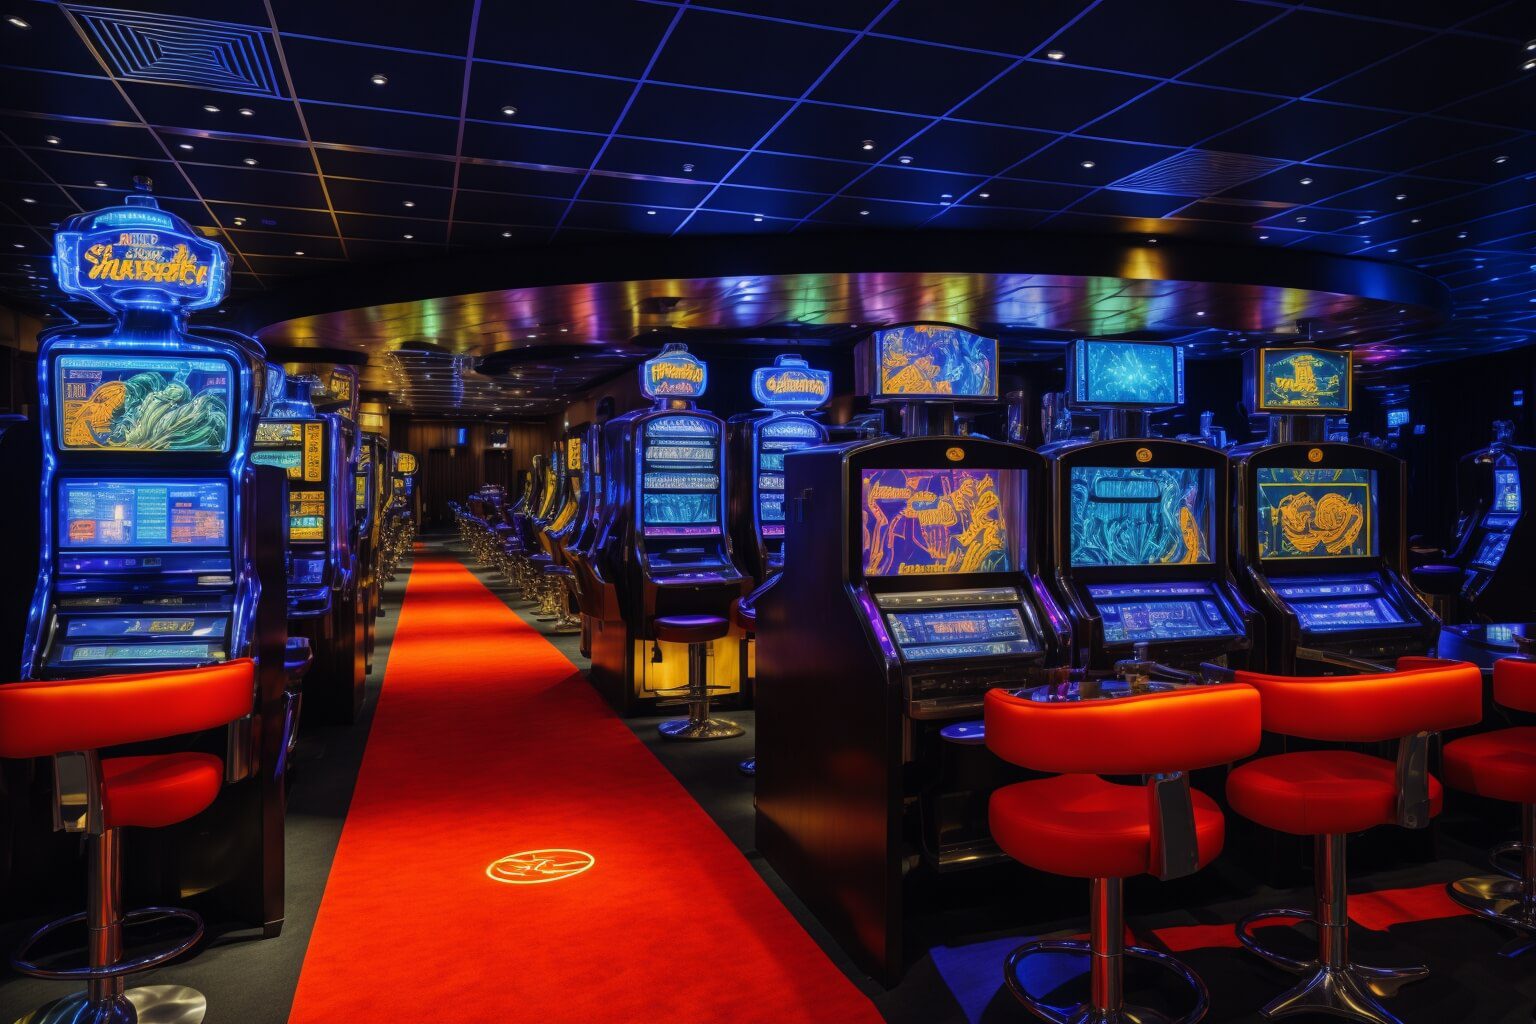 image to image 50 Leonardo Diffusion interior of a casino specifically focusing 0